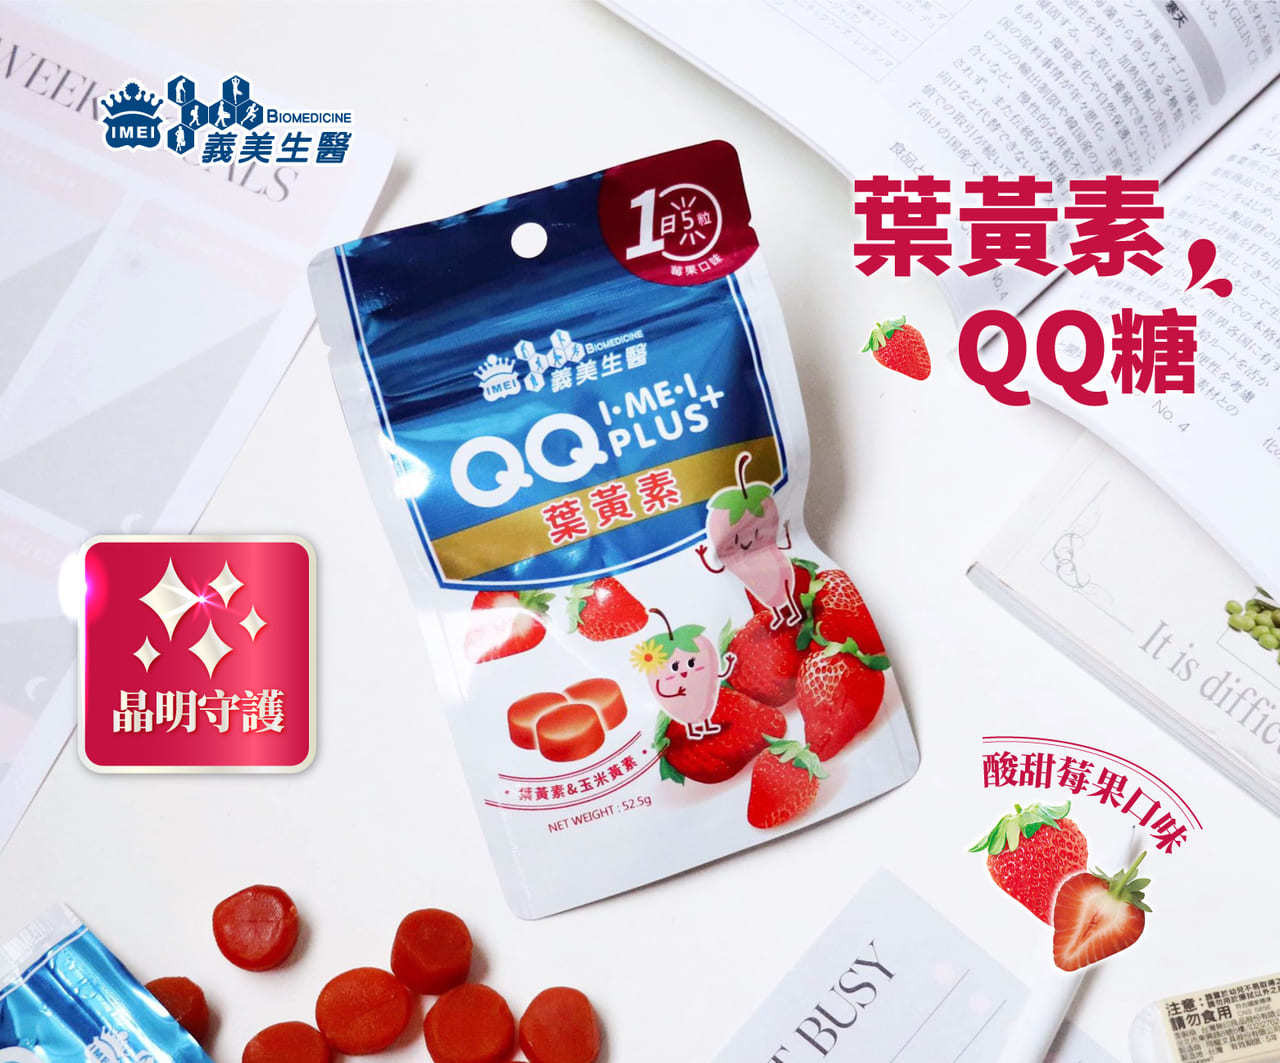 「QQ PLUS+葉黃素」能夠守護晶明，是酸甜莓果口味的QQ糖。